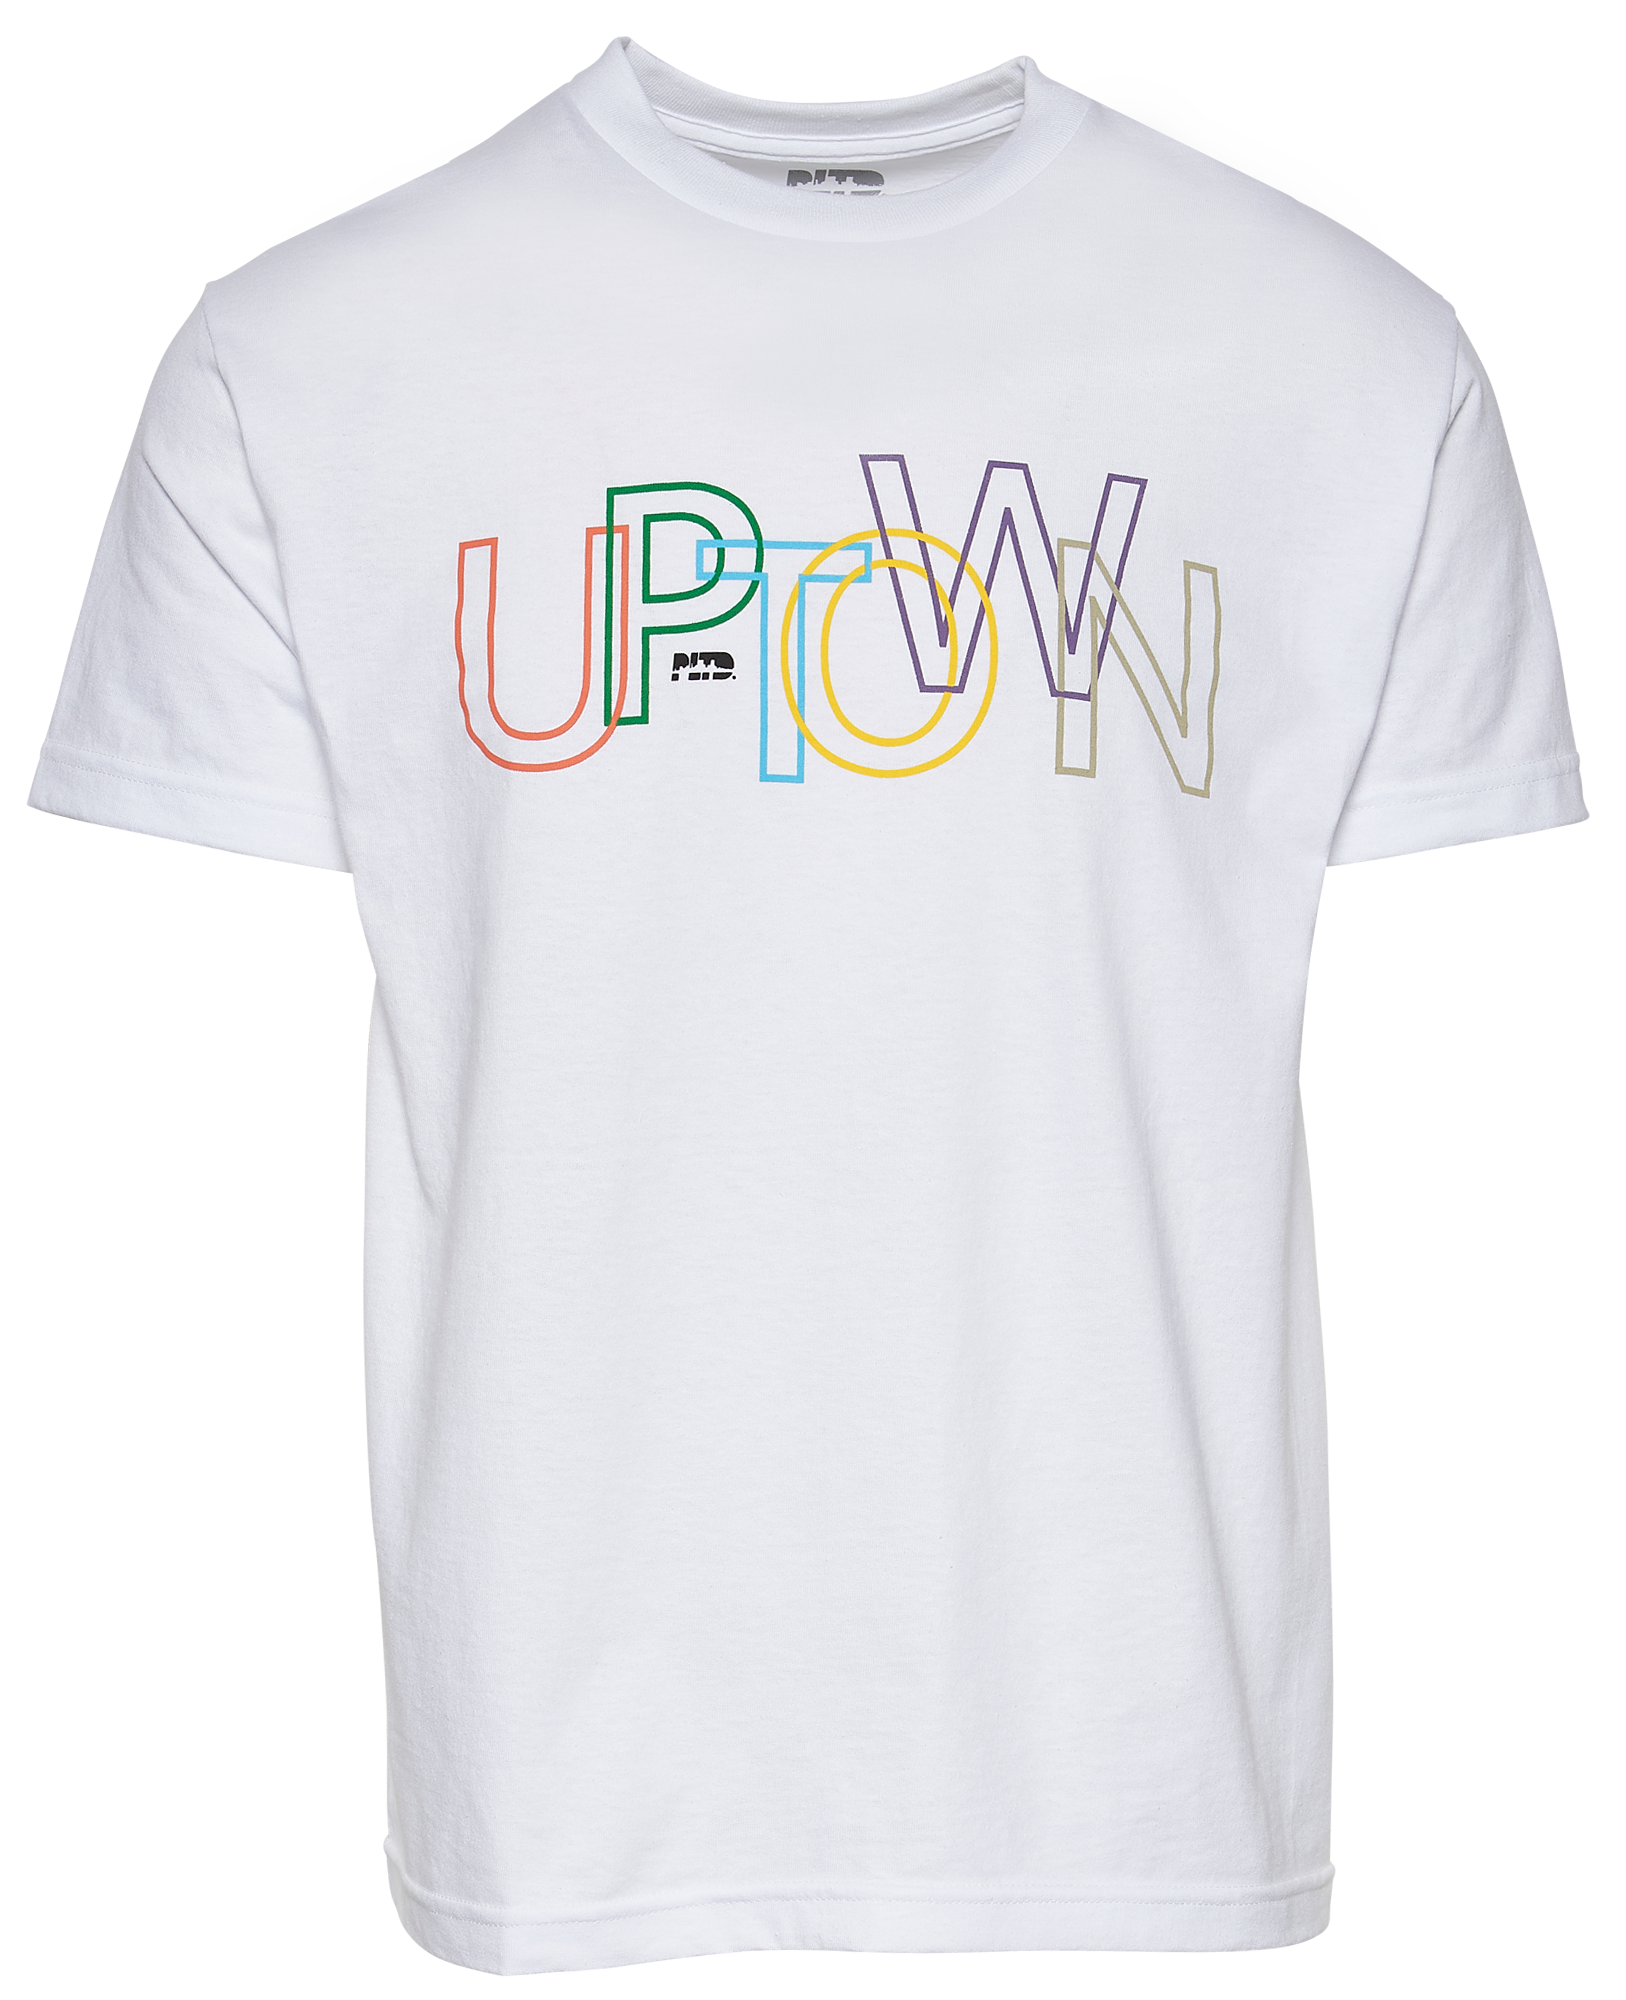 PLTD Uptown T-Shirt - Men's